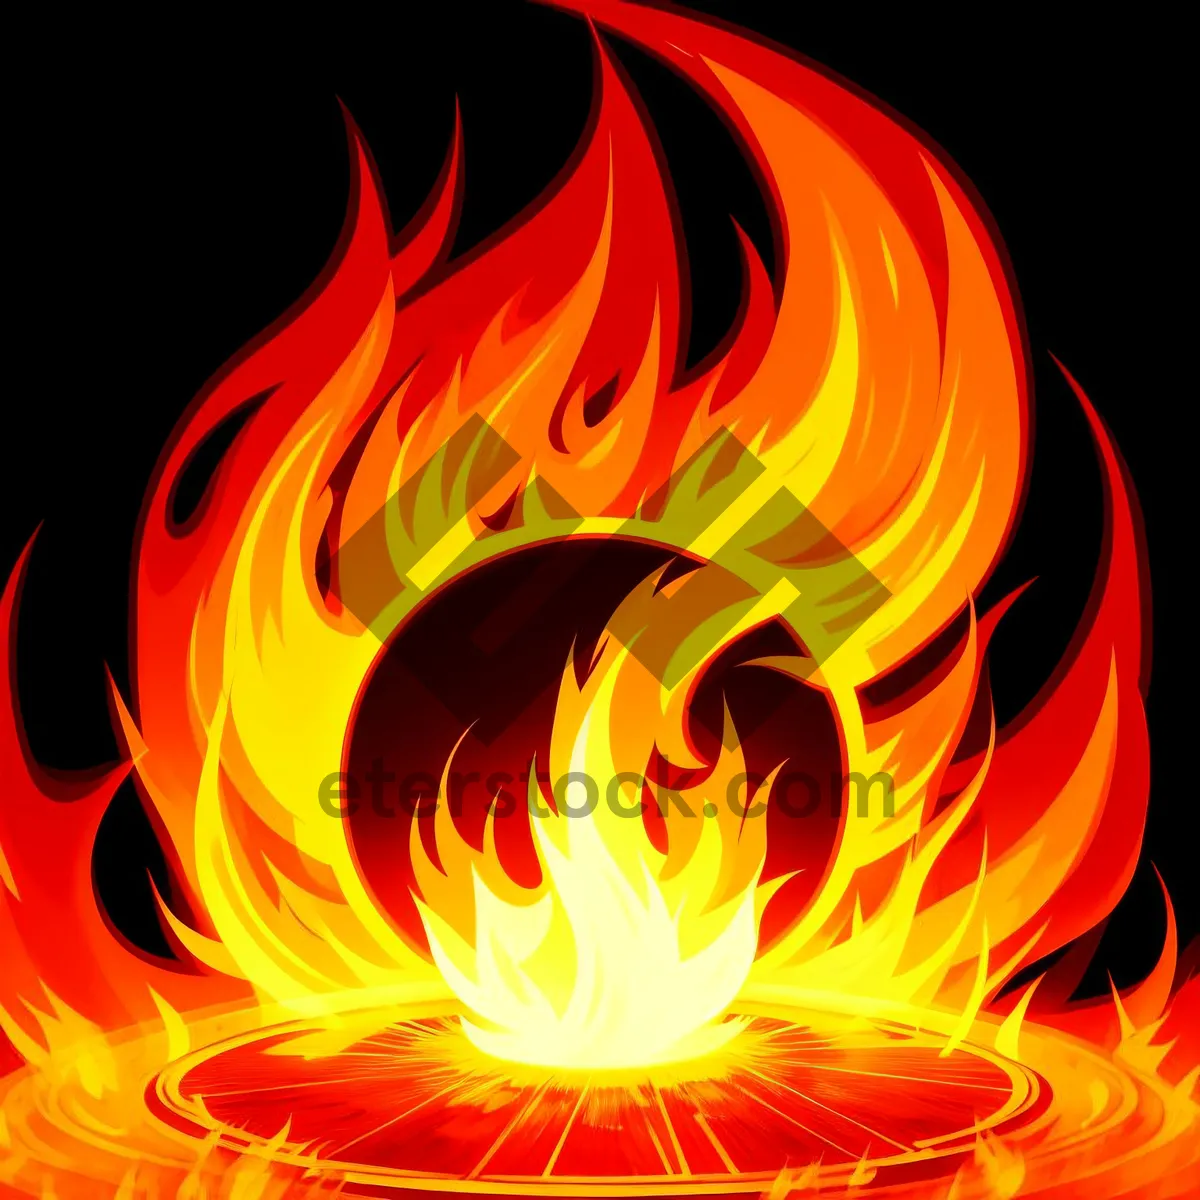 Picture of Fiery Swirls: A Modern Digital Flame Design